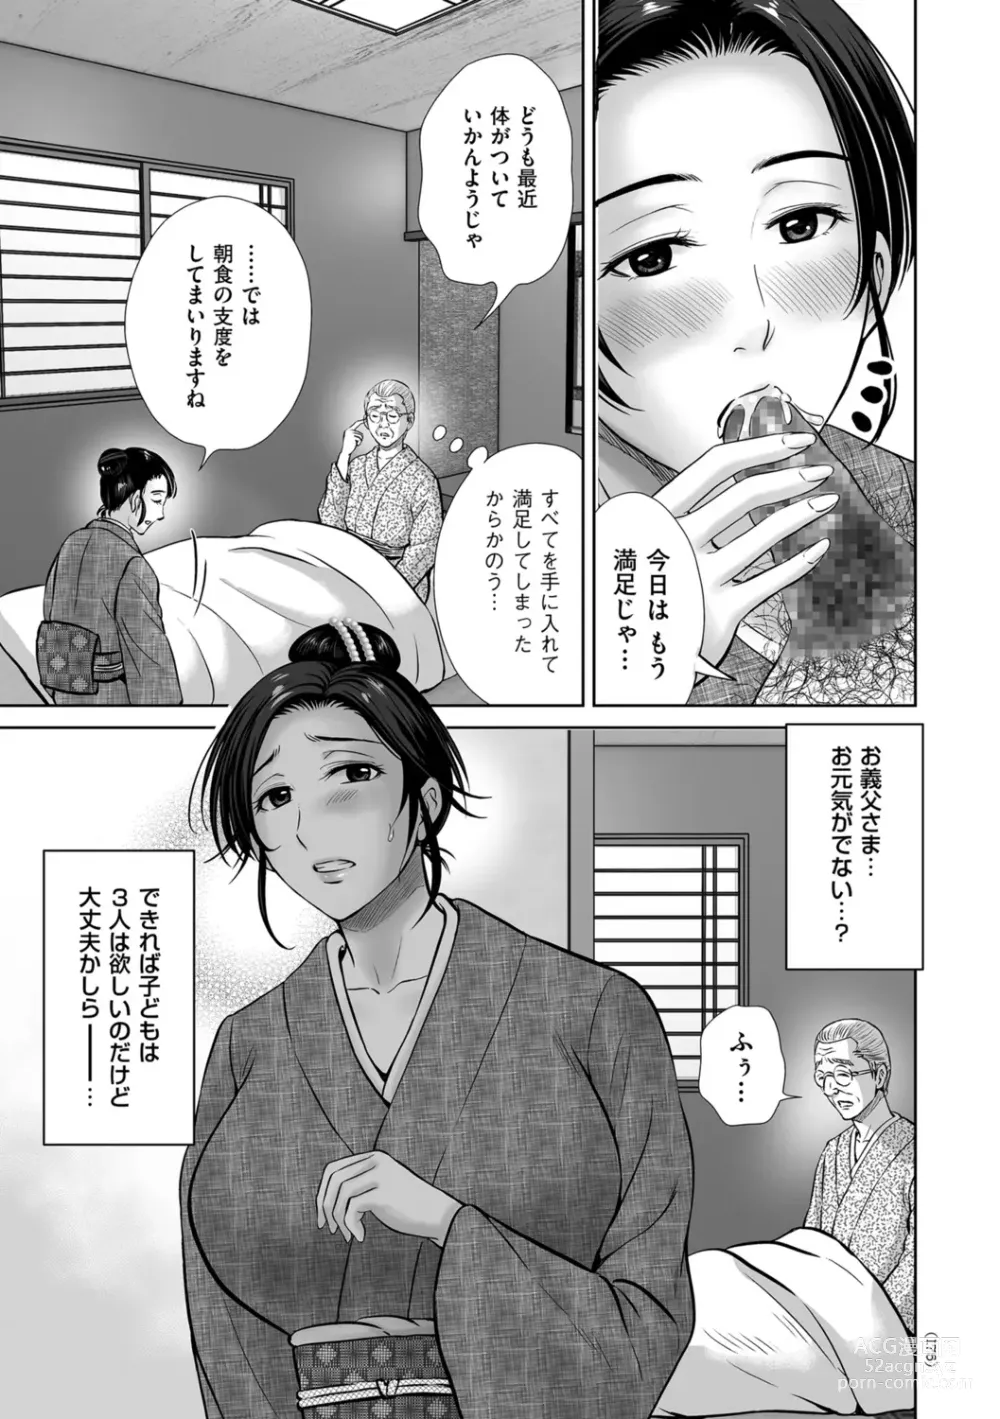 Page 175 of manga Mesuzakari no Haha-tachi e